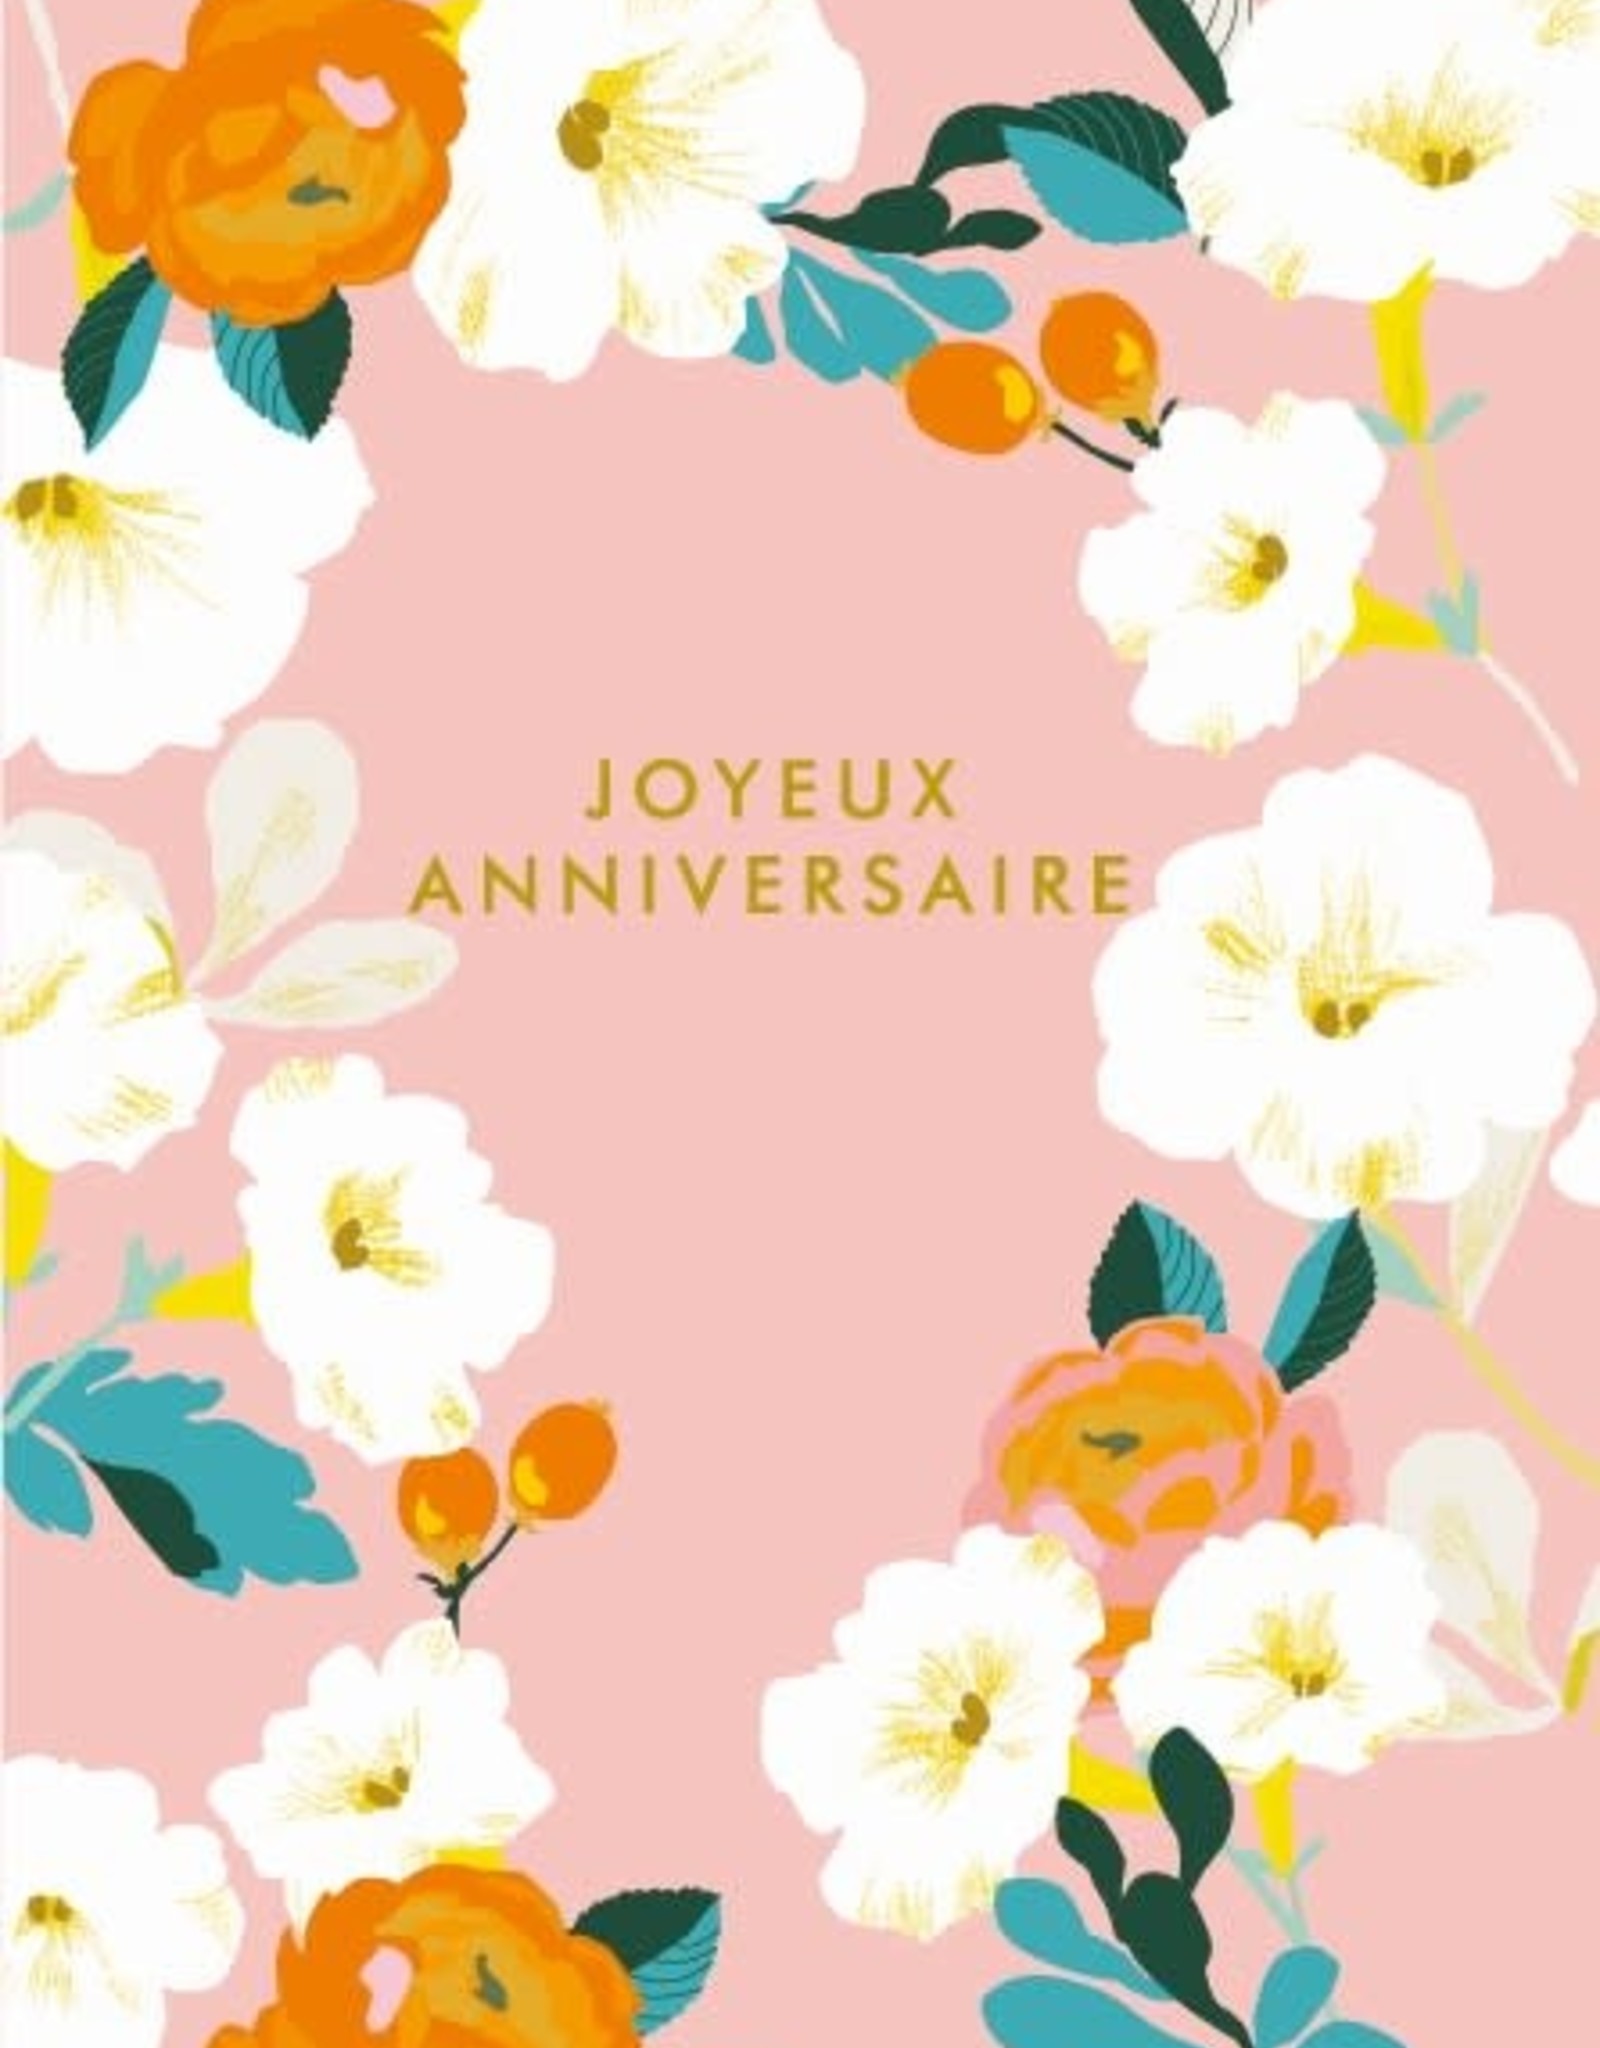 Joyeux Anniversaire Pink White Flowers Greeting Card